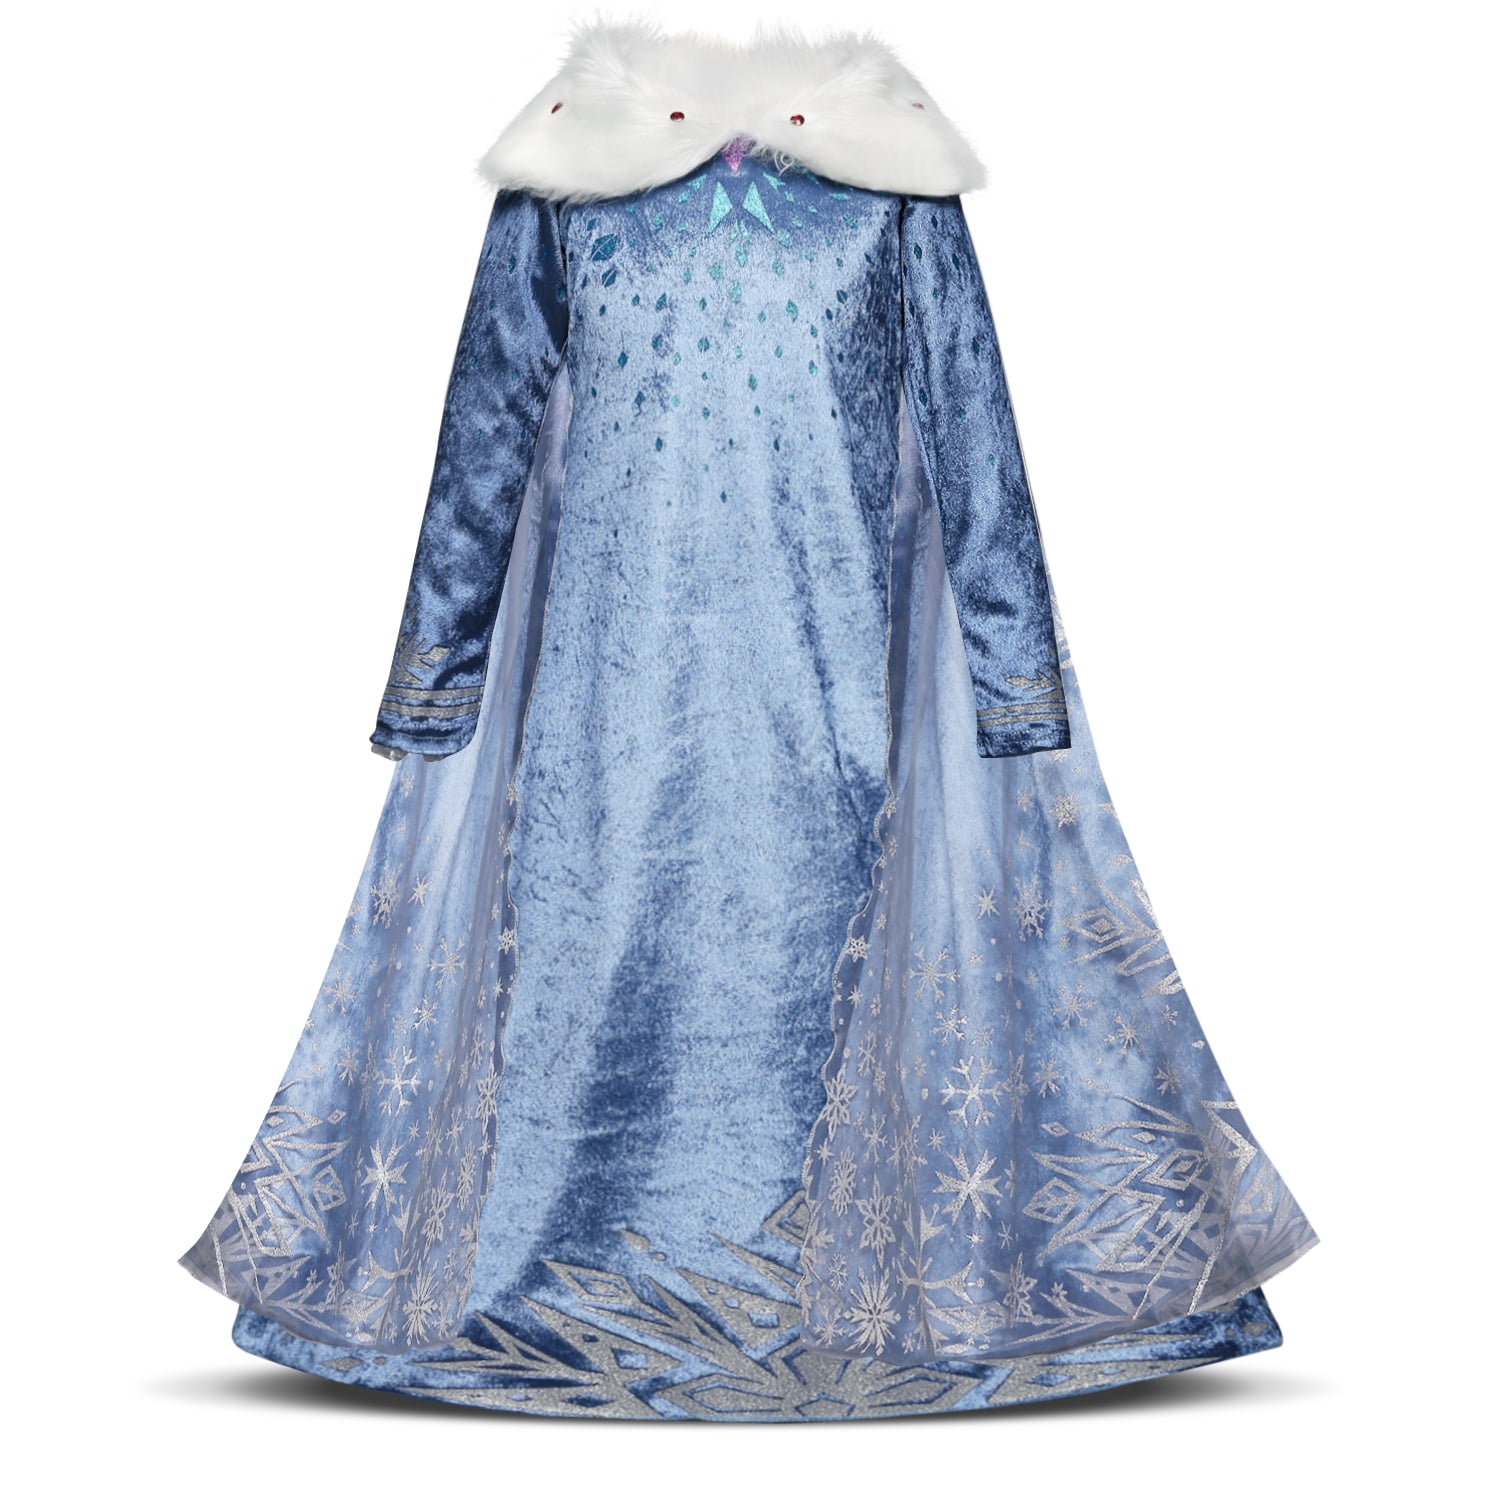 Childrens Kids Girls Cute Frozen Queen Elsa Purple Dress Gown Halloween Costume